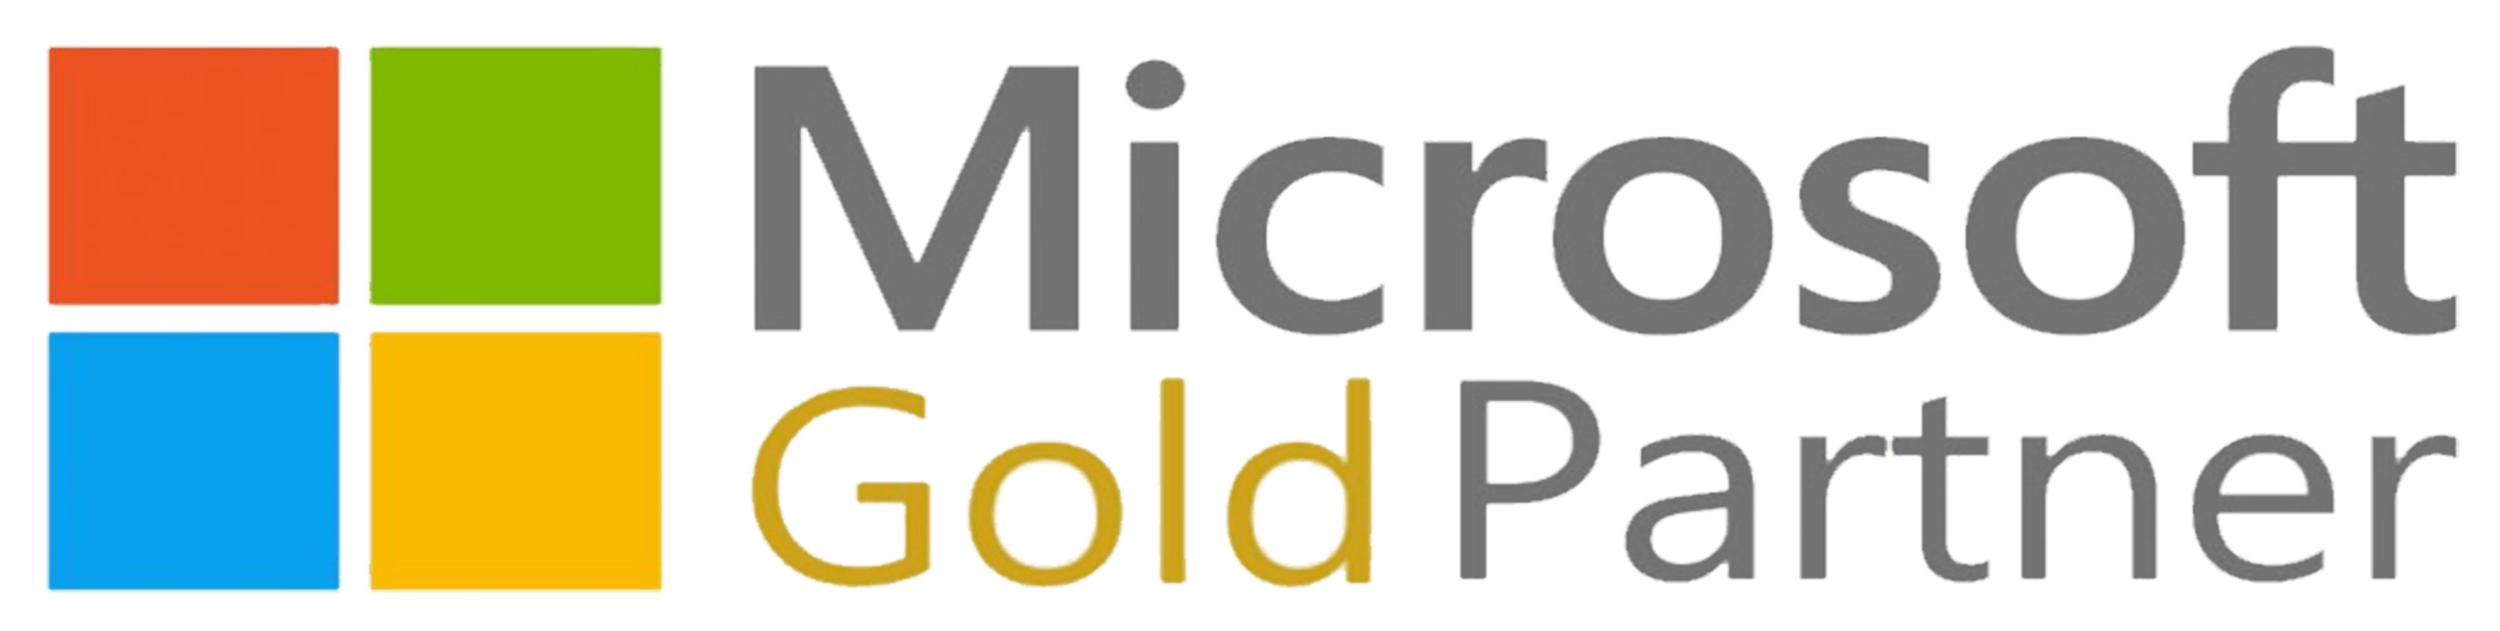 Microsoft Gold Partner (Copy)